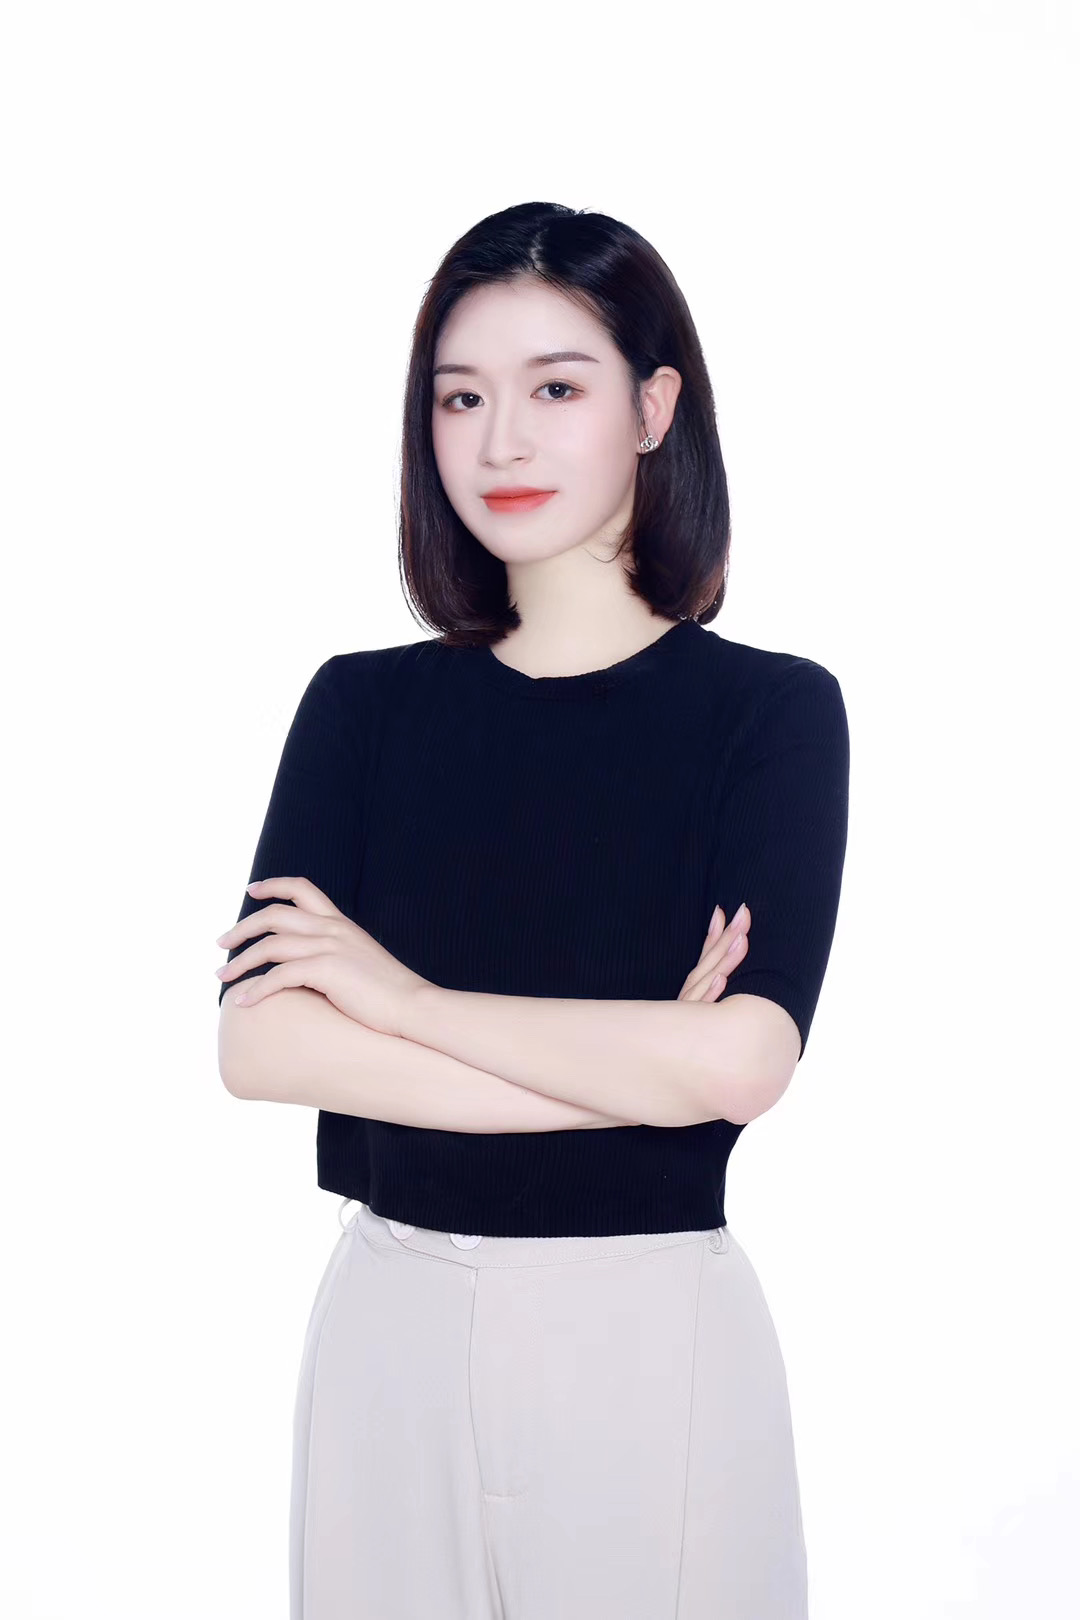 Ms. Haiyun Zhang